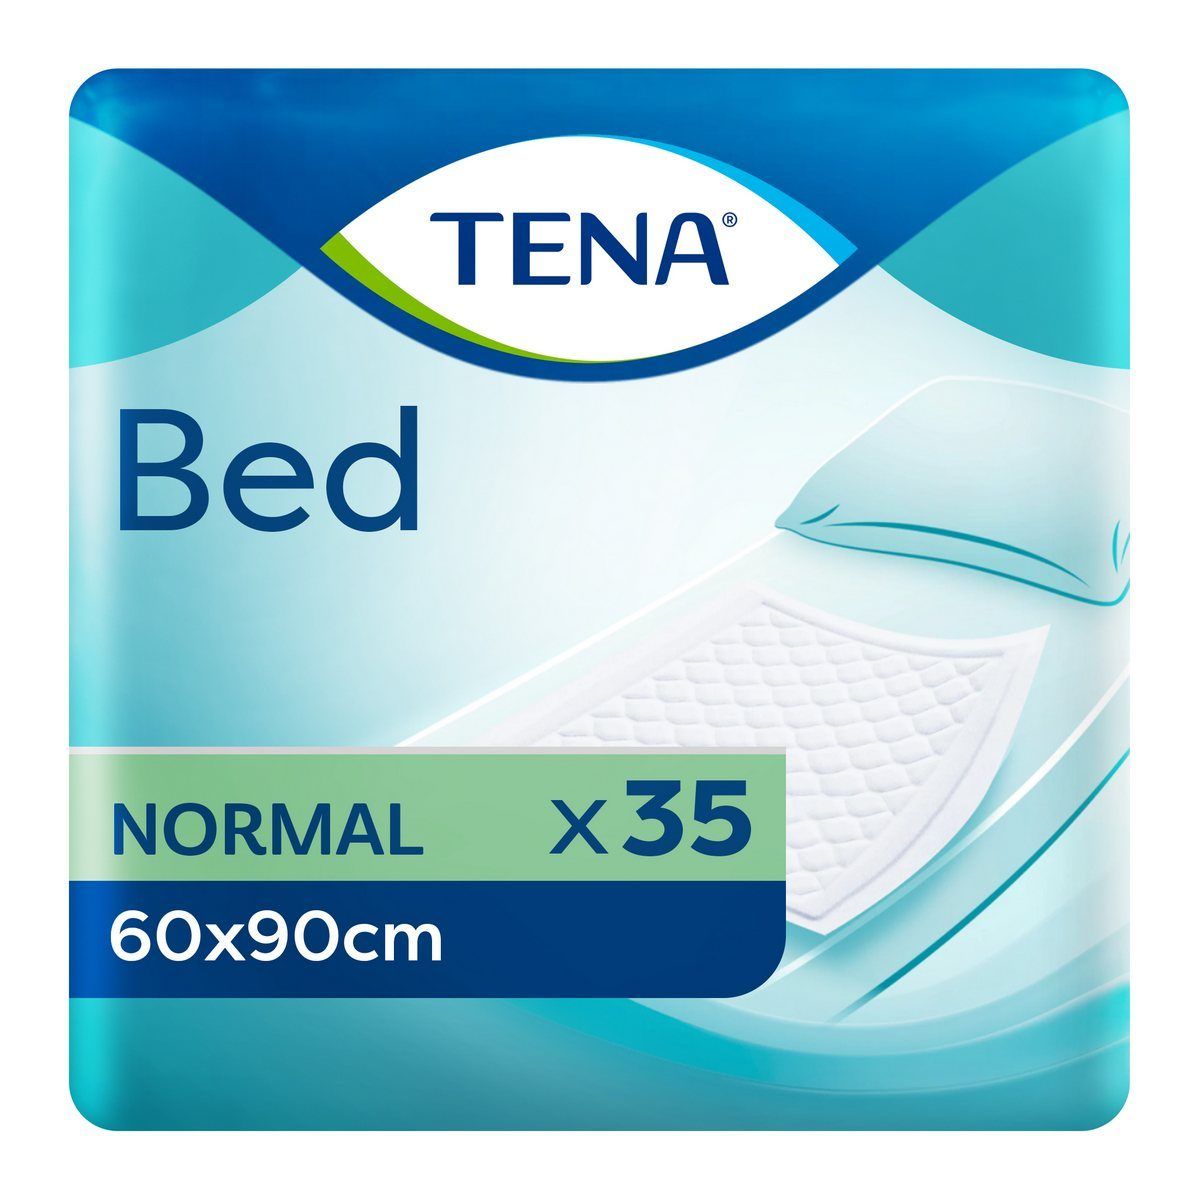 Tena Bed Basic 60 x 90cm - 35 Pack